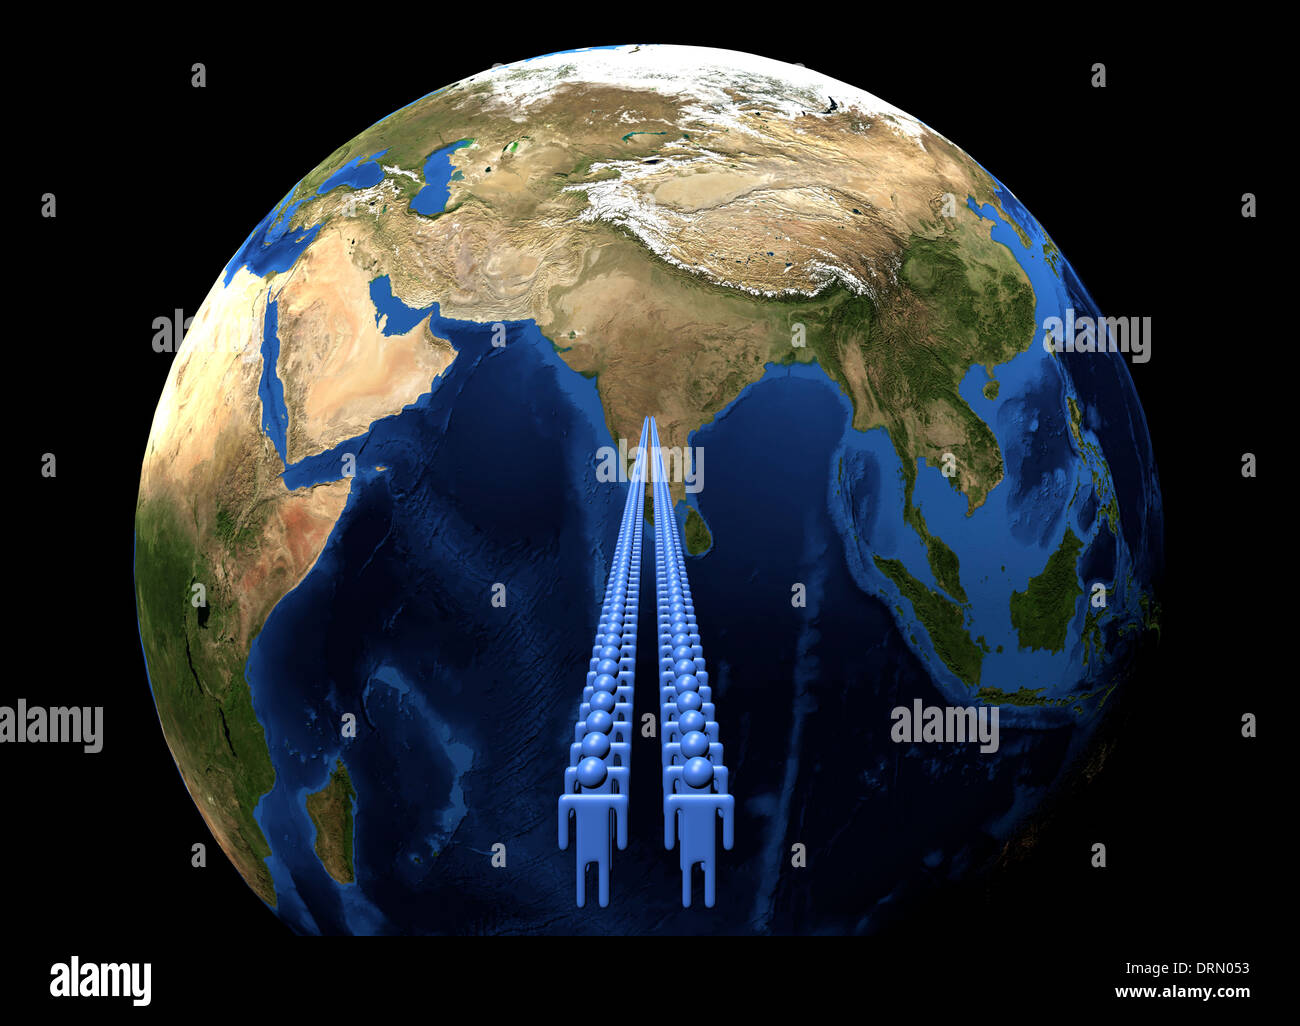 Line of men leading to India on Earth globe illustration Stock Photo